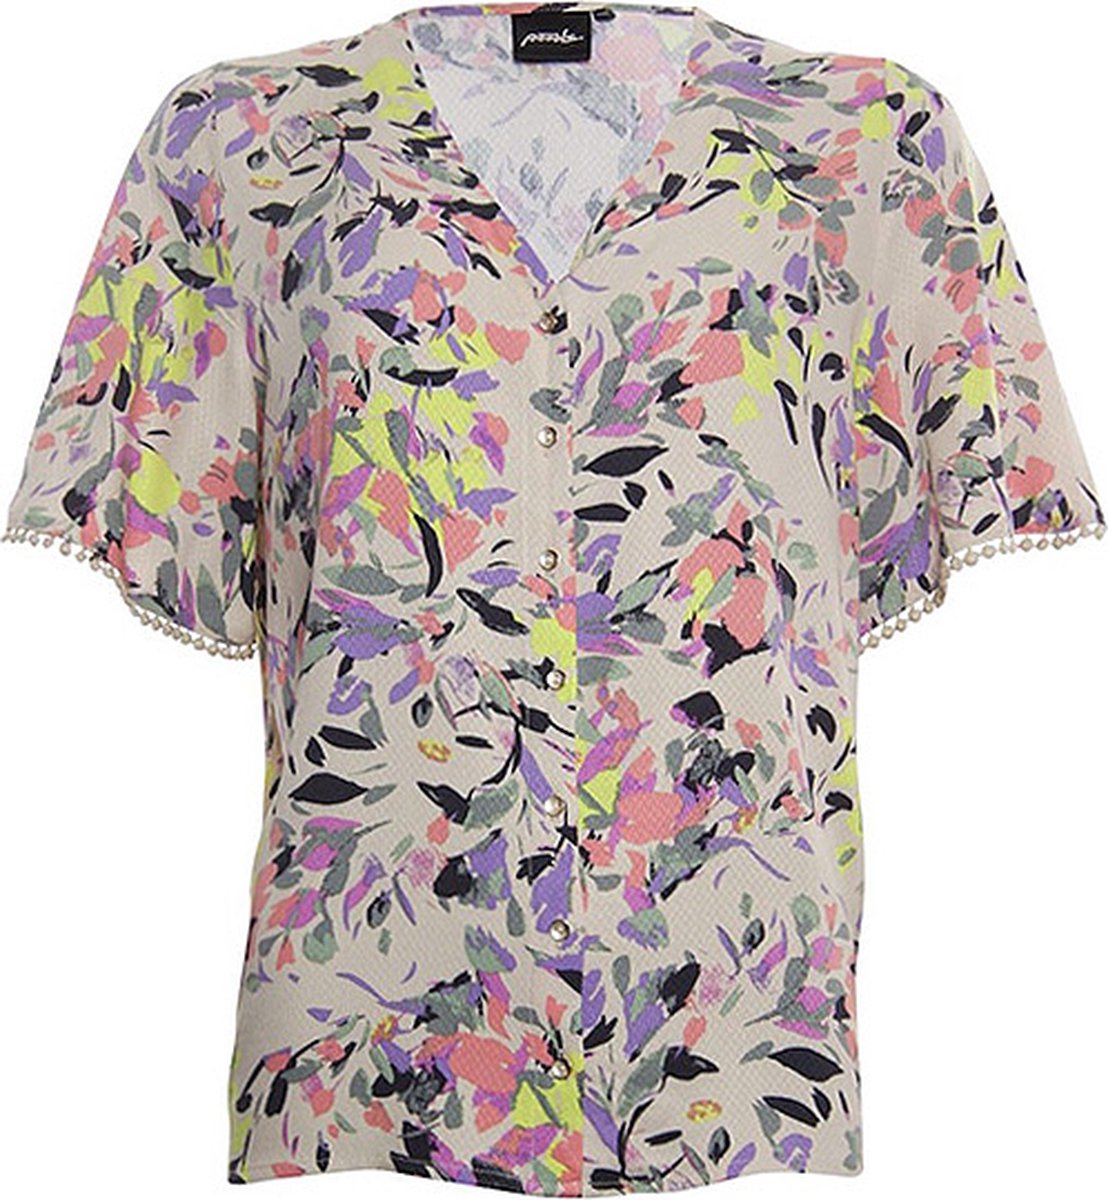 Poools blouse 423104 - Multi colour